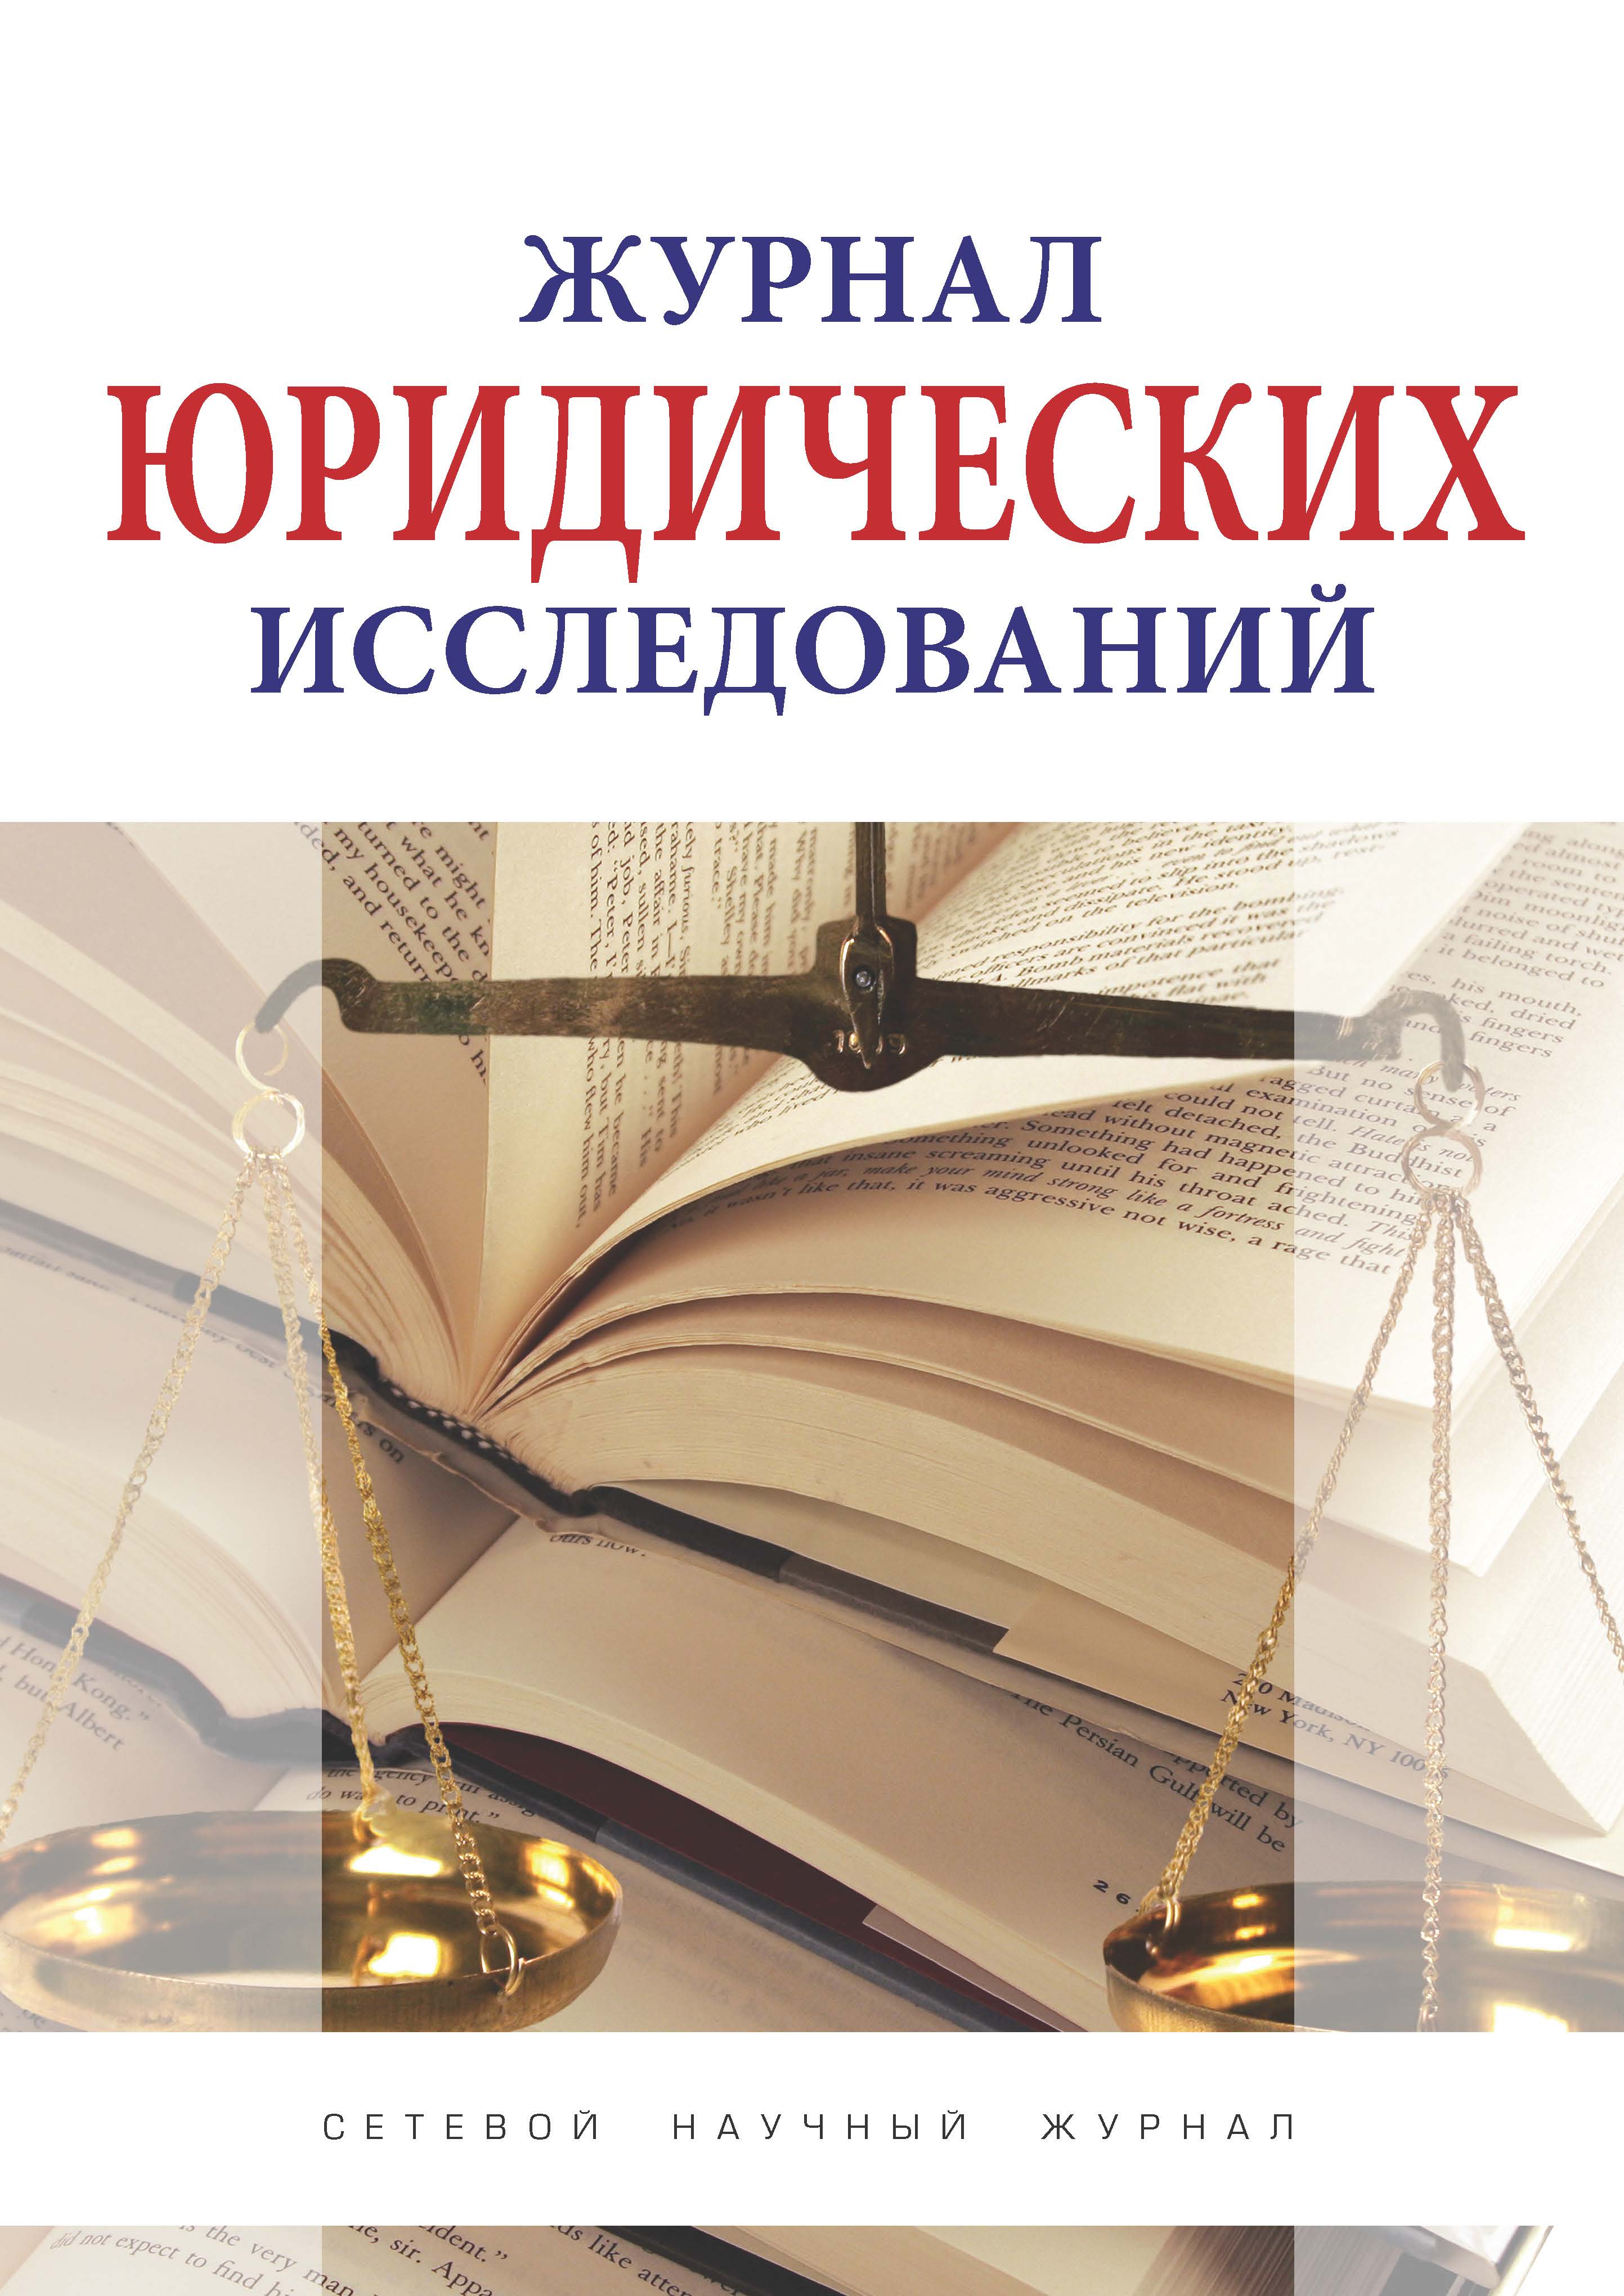                         Journal of Legal Studies
            